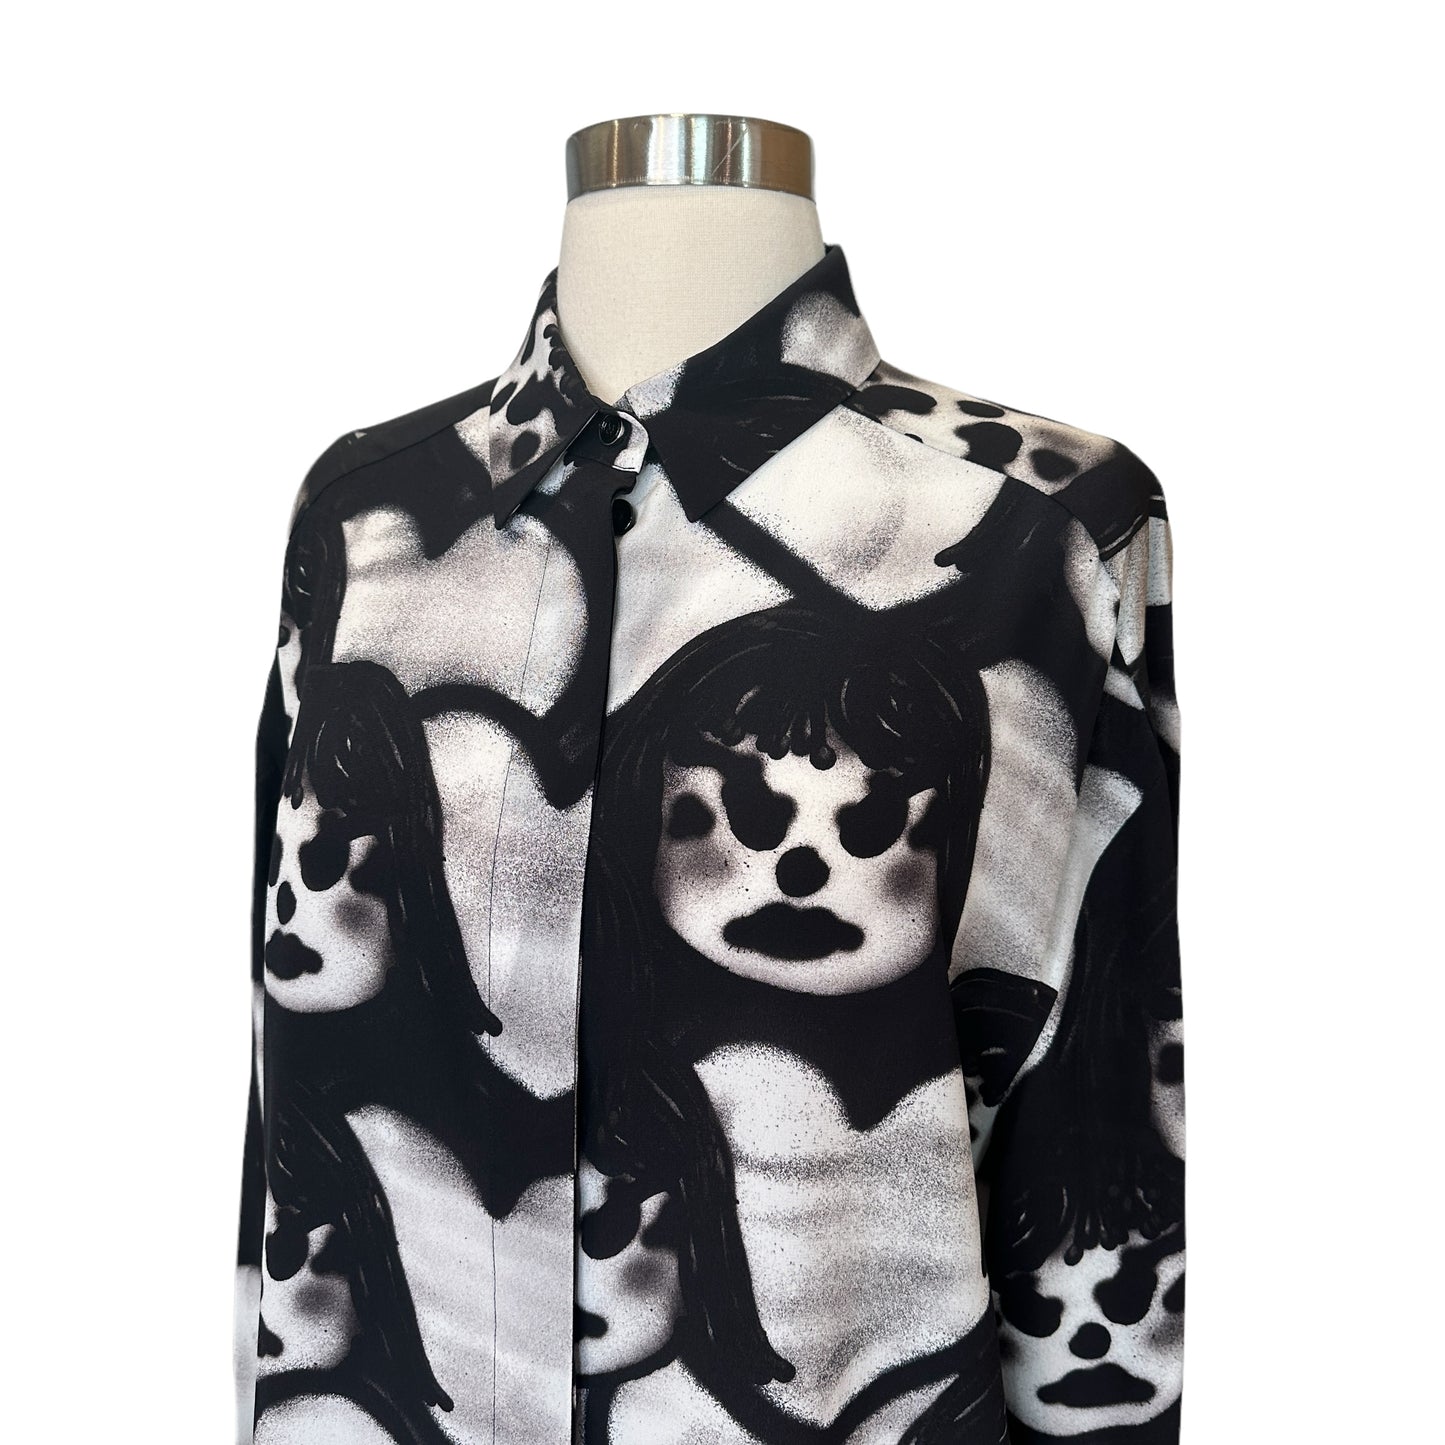 Black & White Collab Shirt - S/XL